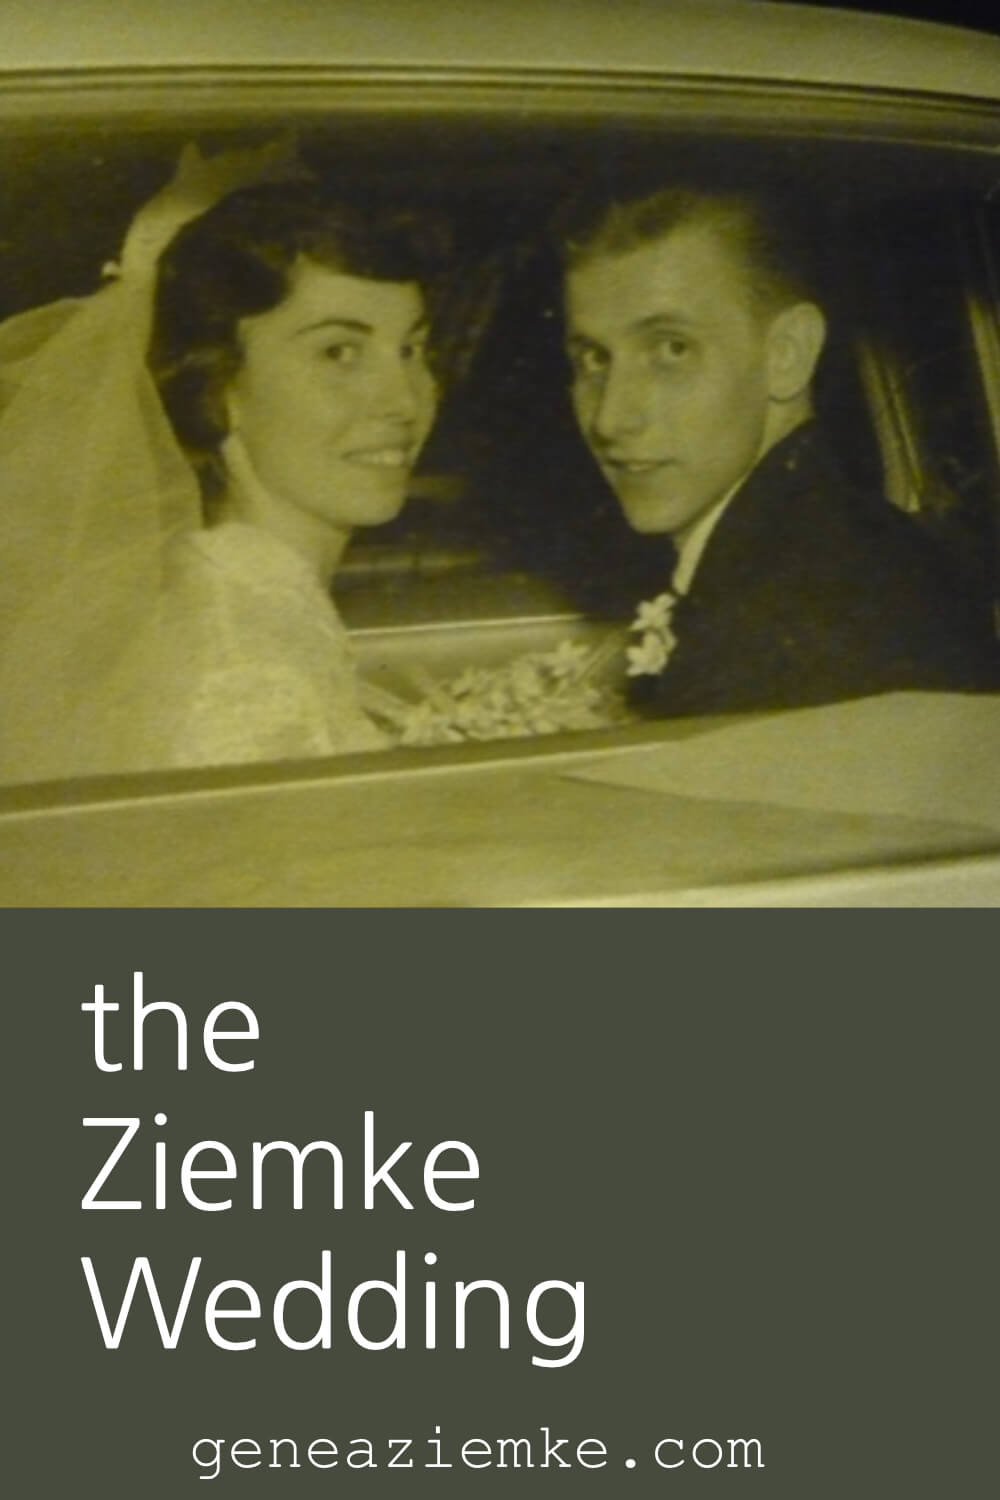 The Ziemke Wedding